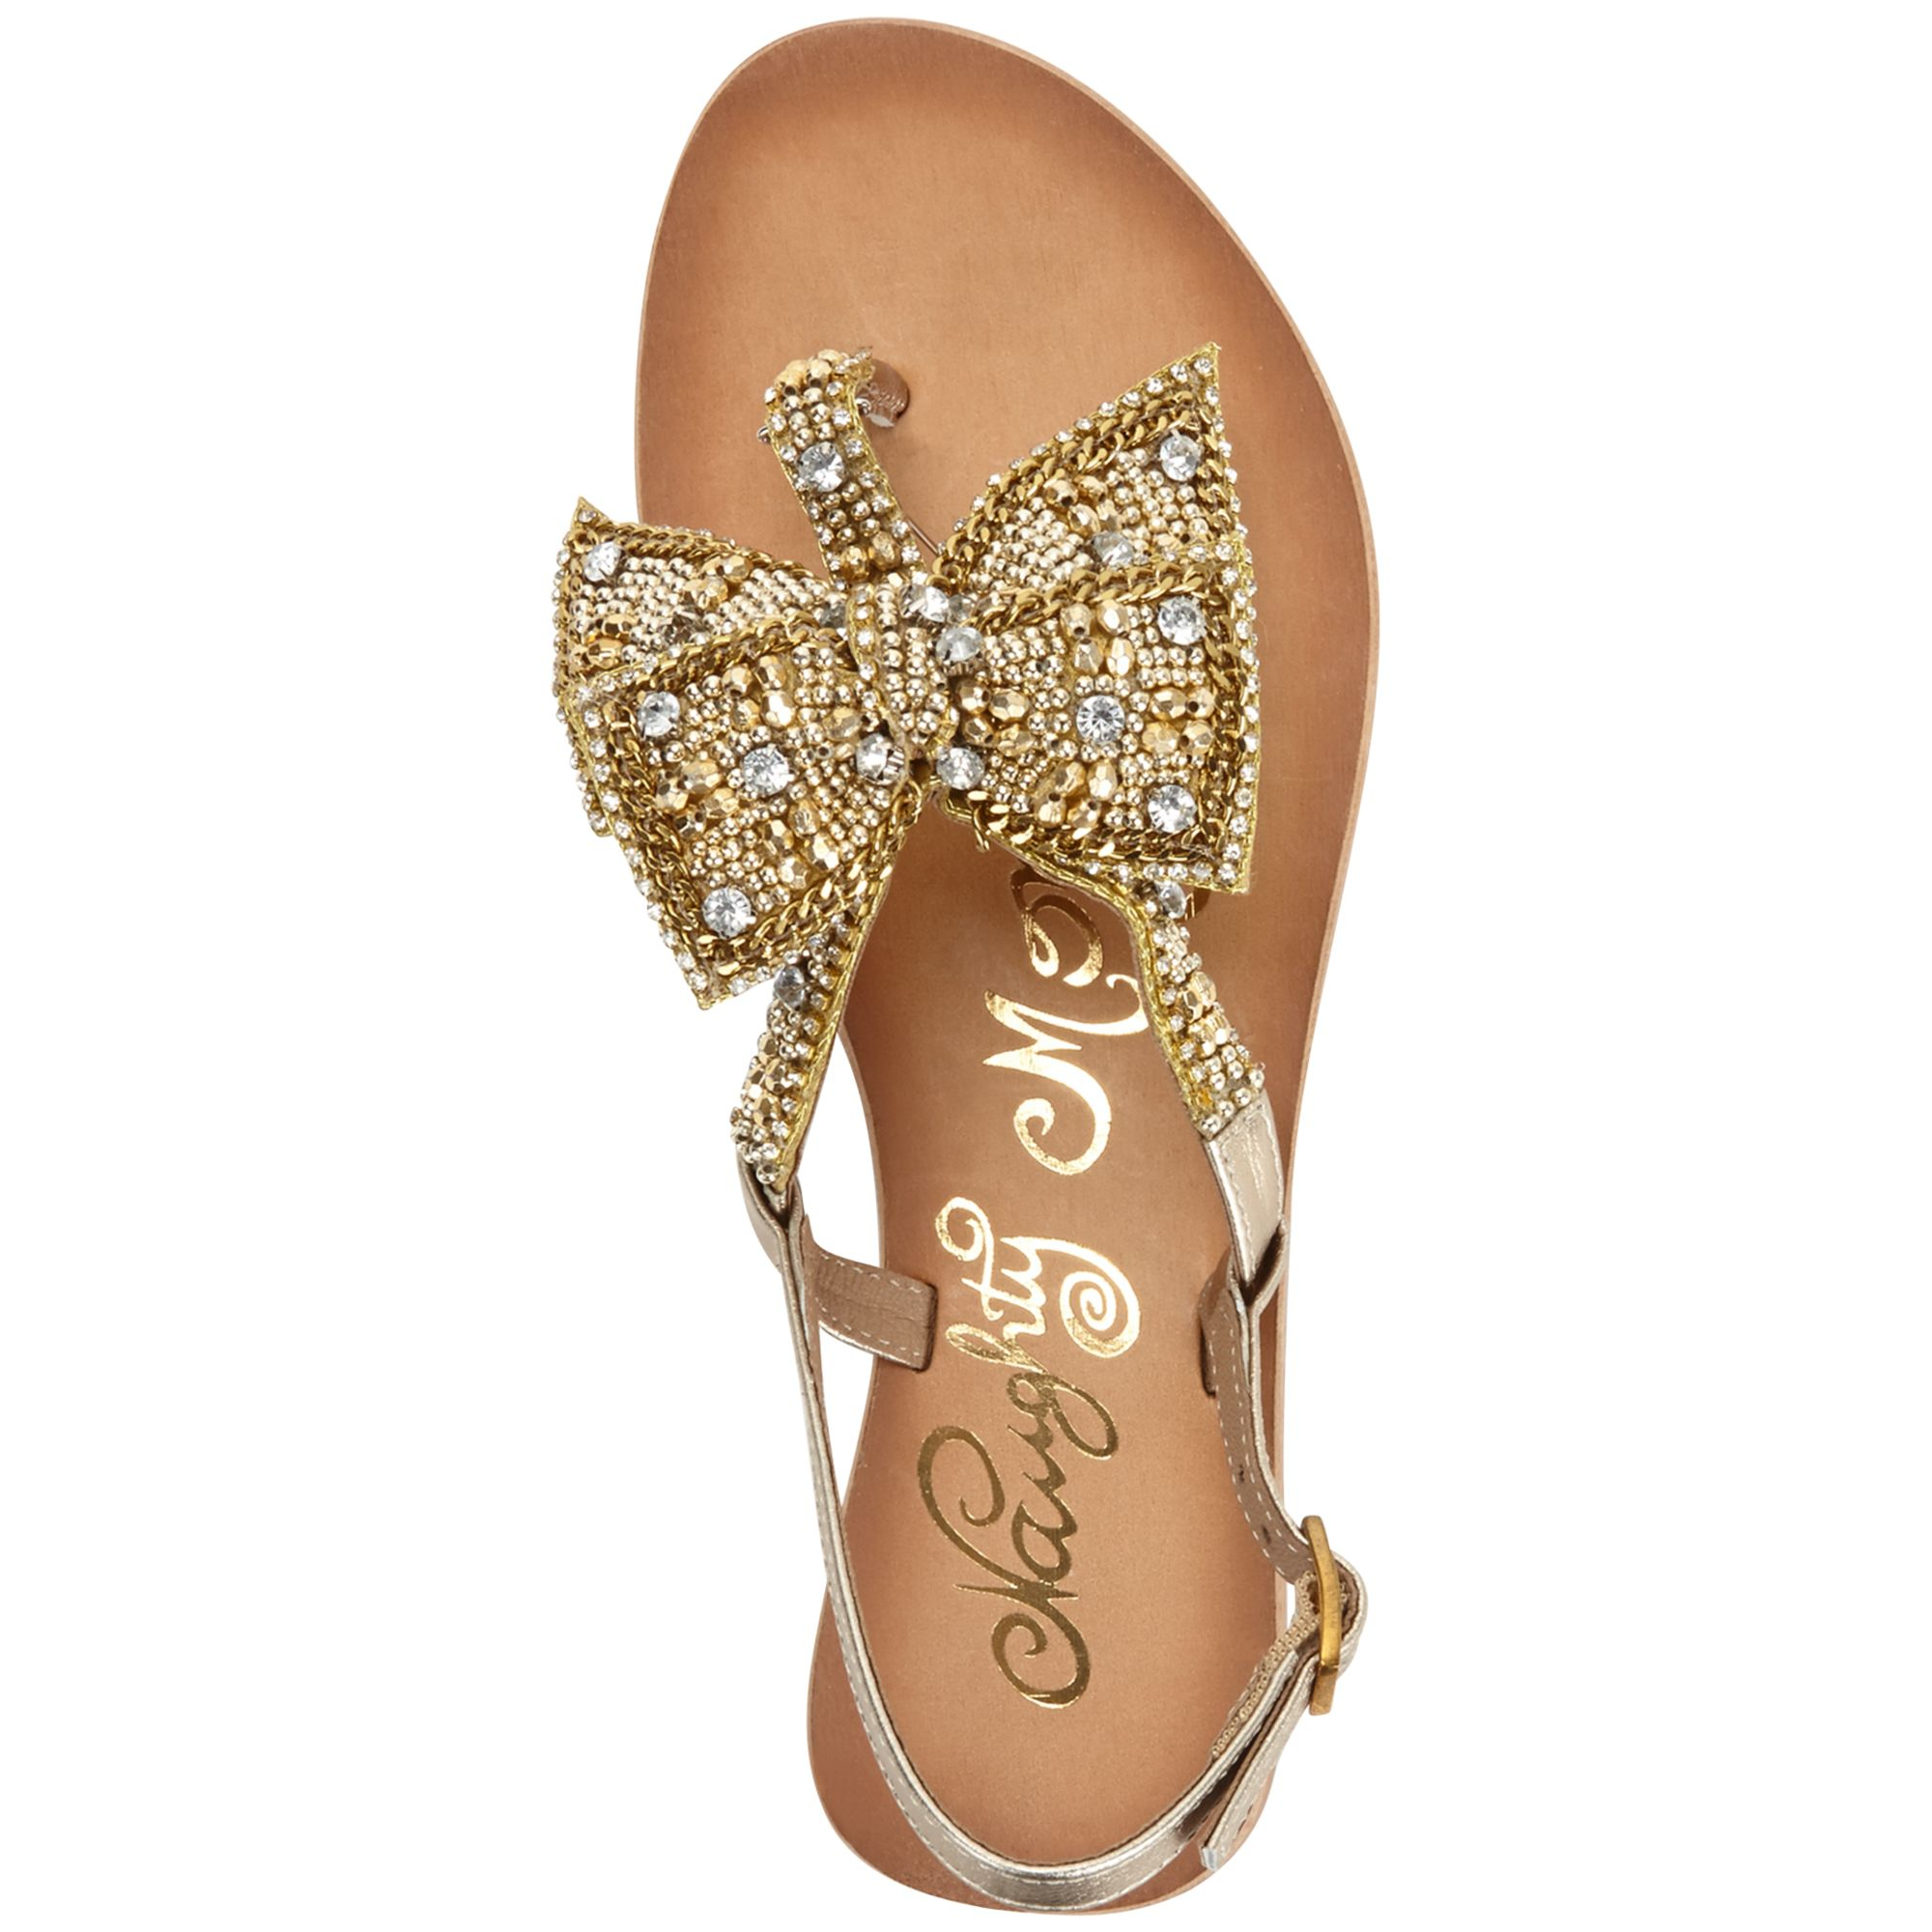 Lyst - Naughty Monkey Jewel Delight Flat Thong Sandals in Metallic